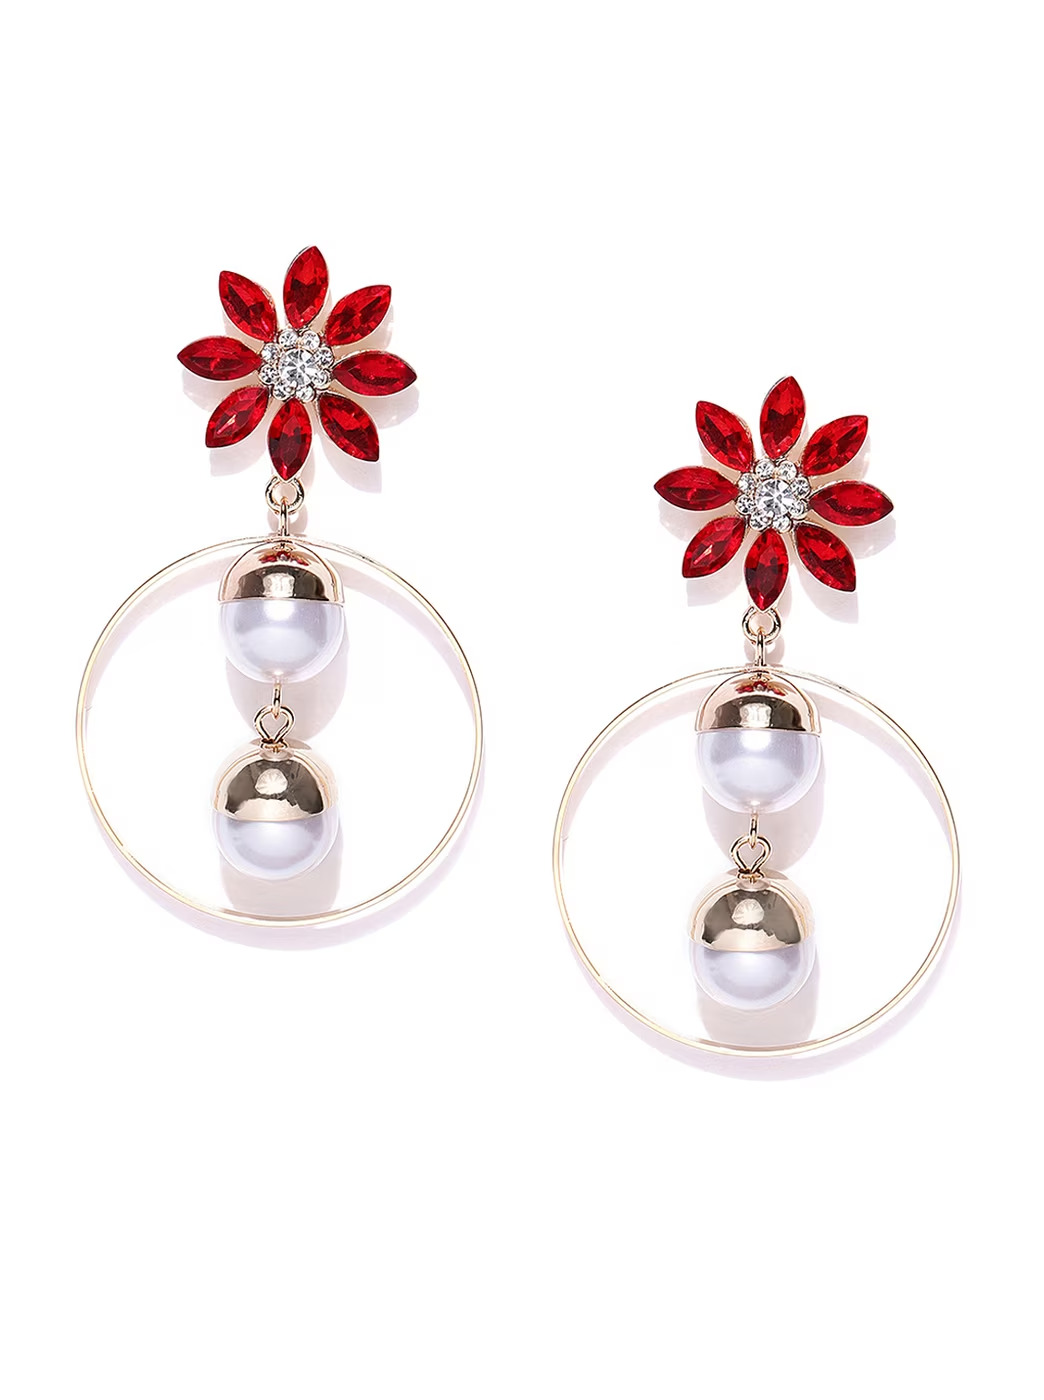 Beautiful Floral Pattern Hoop Earrings with White Pearl Hangings Red